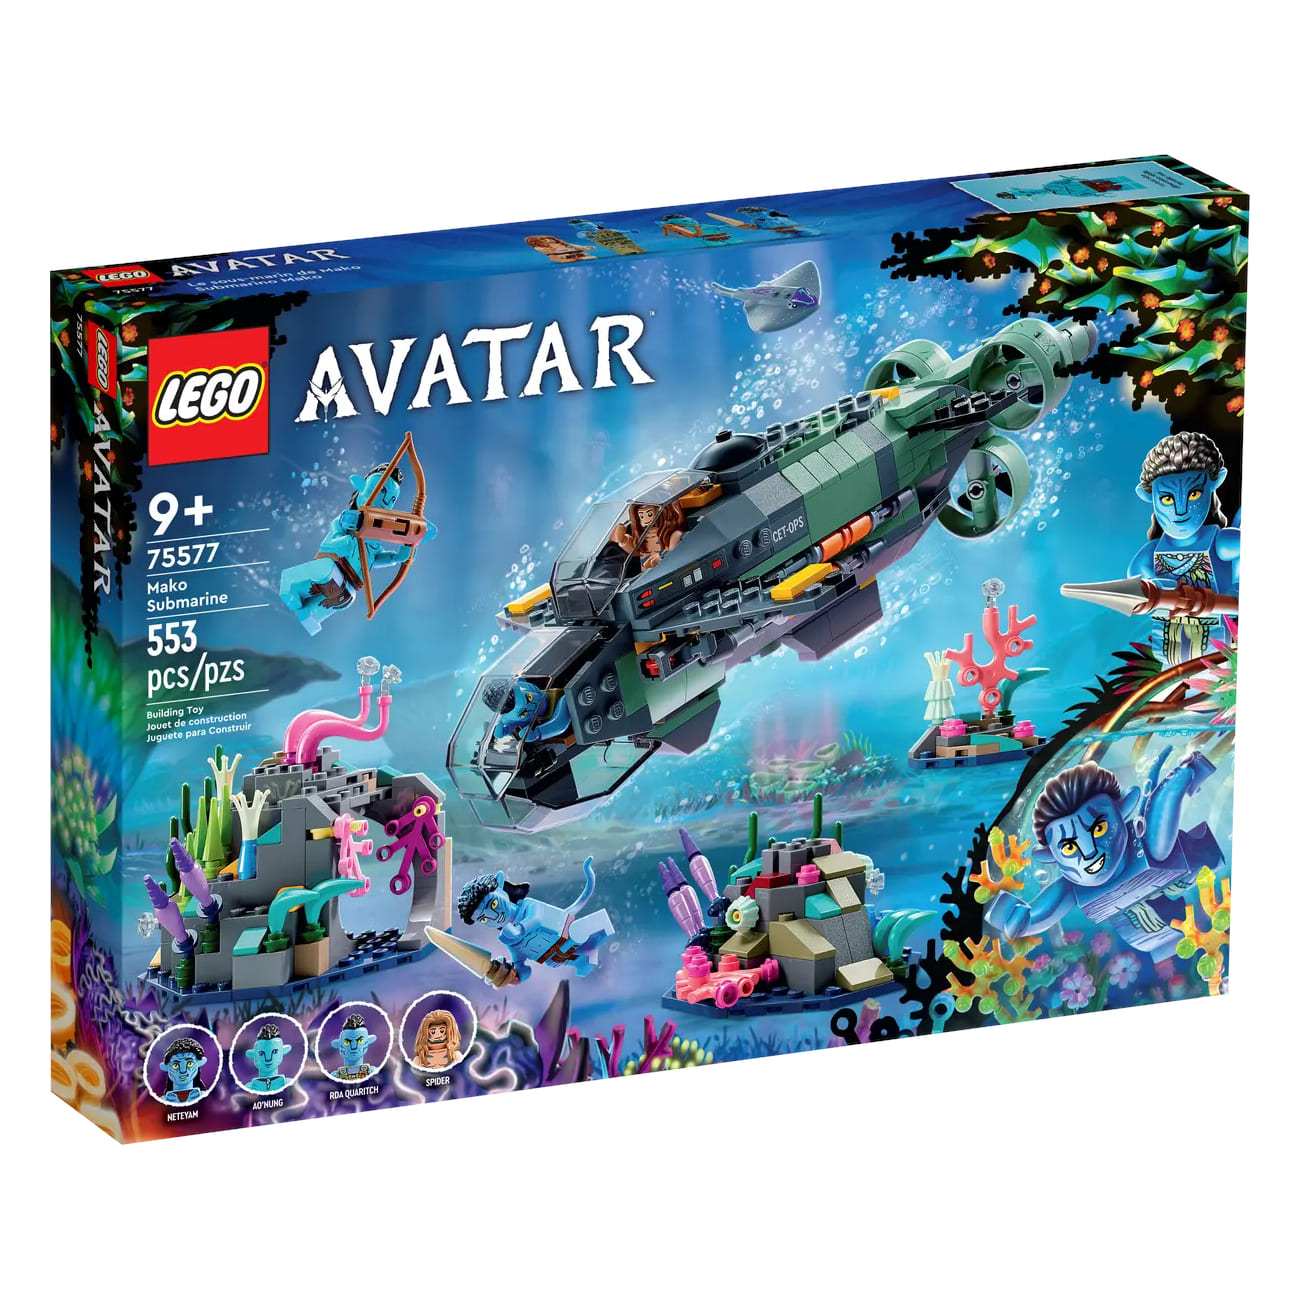 Конструктор LEGO Avatar Mako Submarine 75577, 553 детали